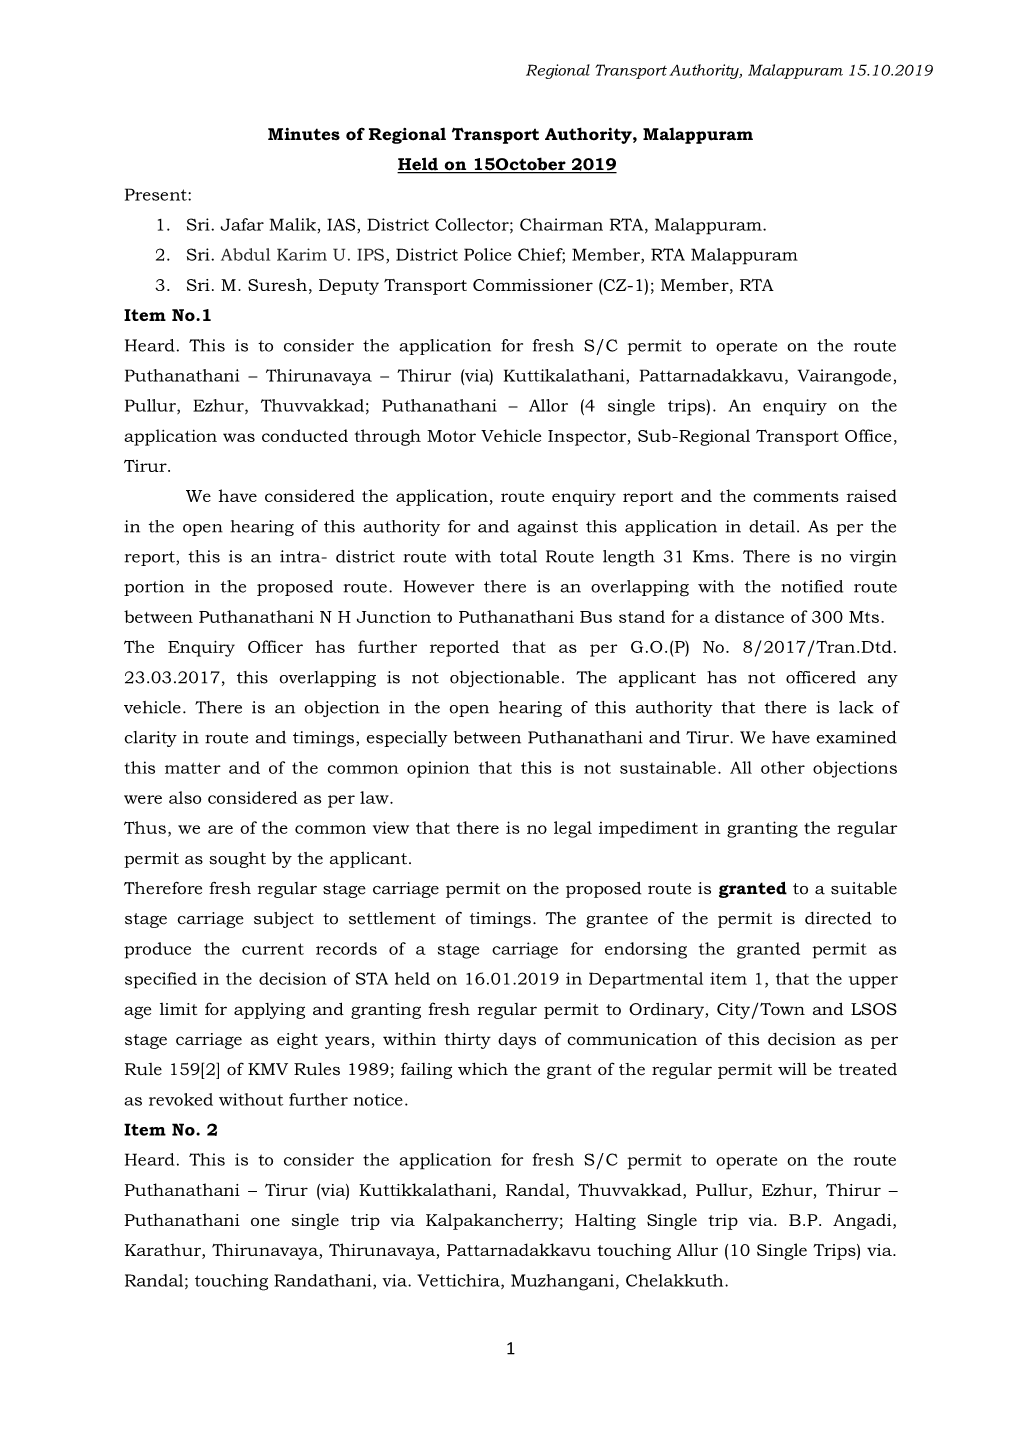 Minutes of Regional Transport Authority, Malappuram Held on 15October 2019 Present: 1